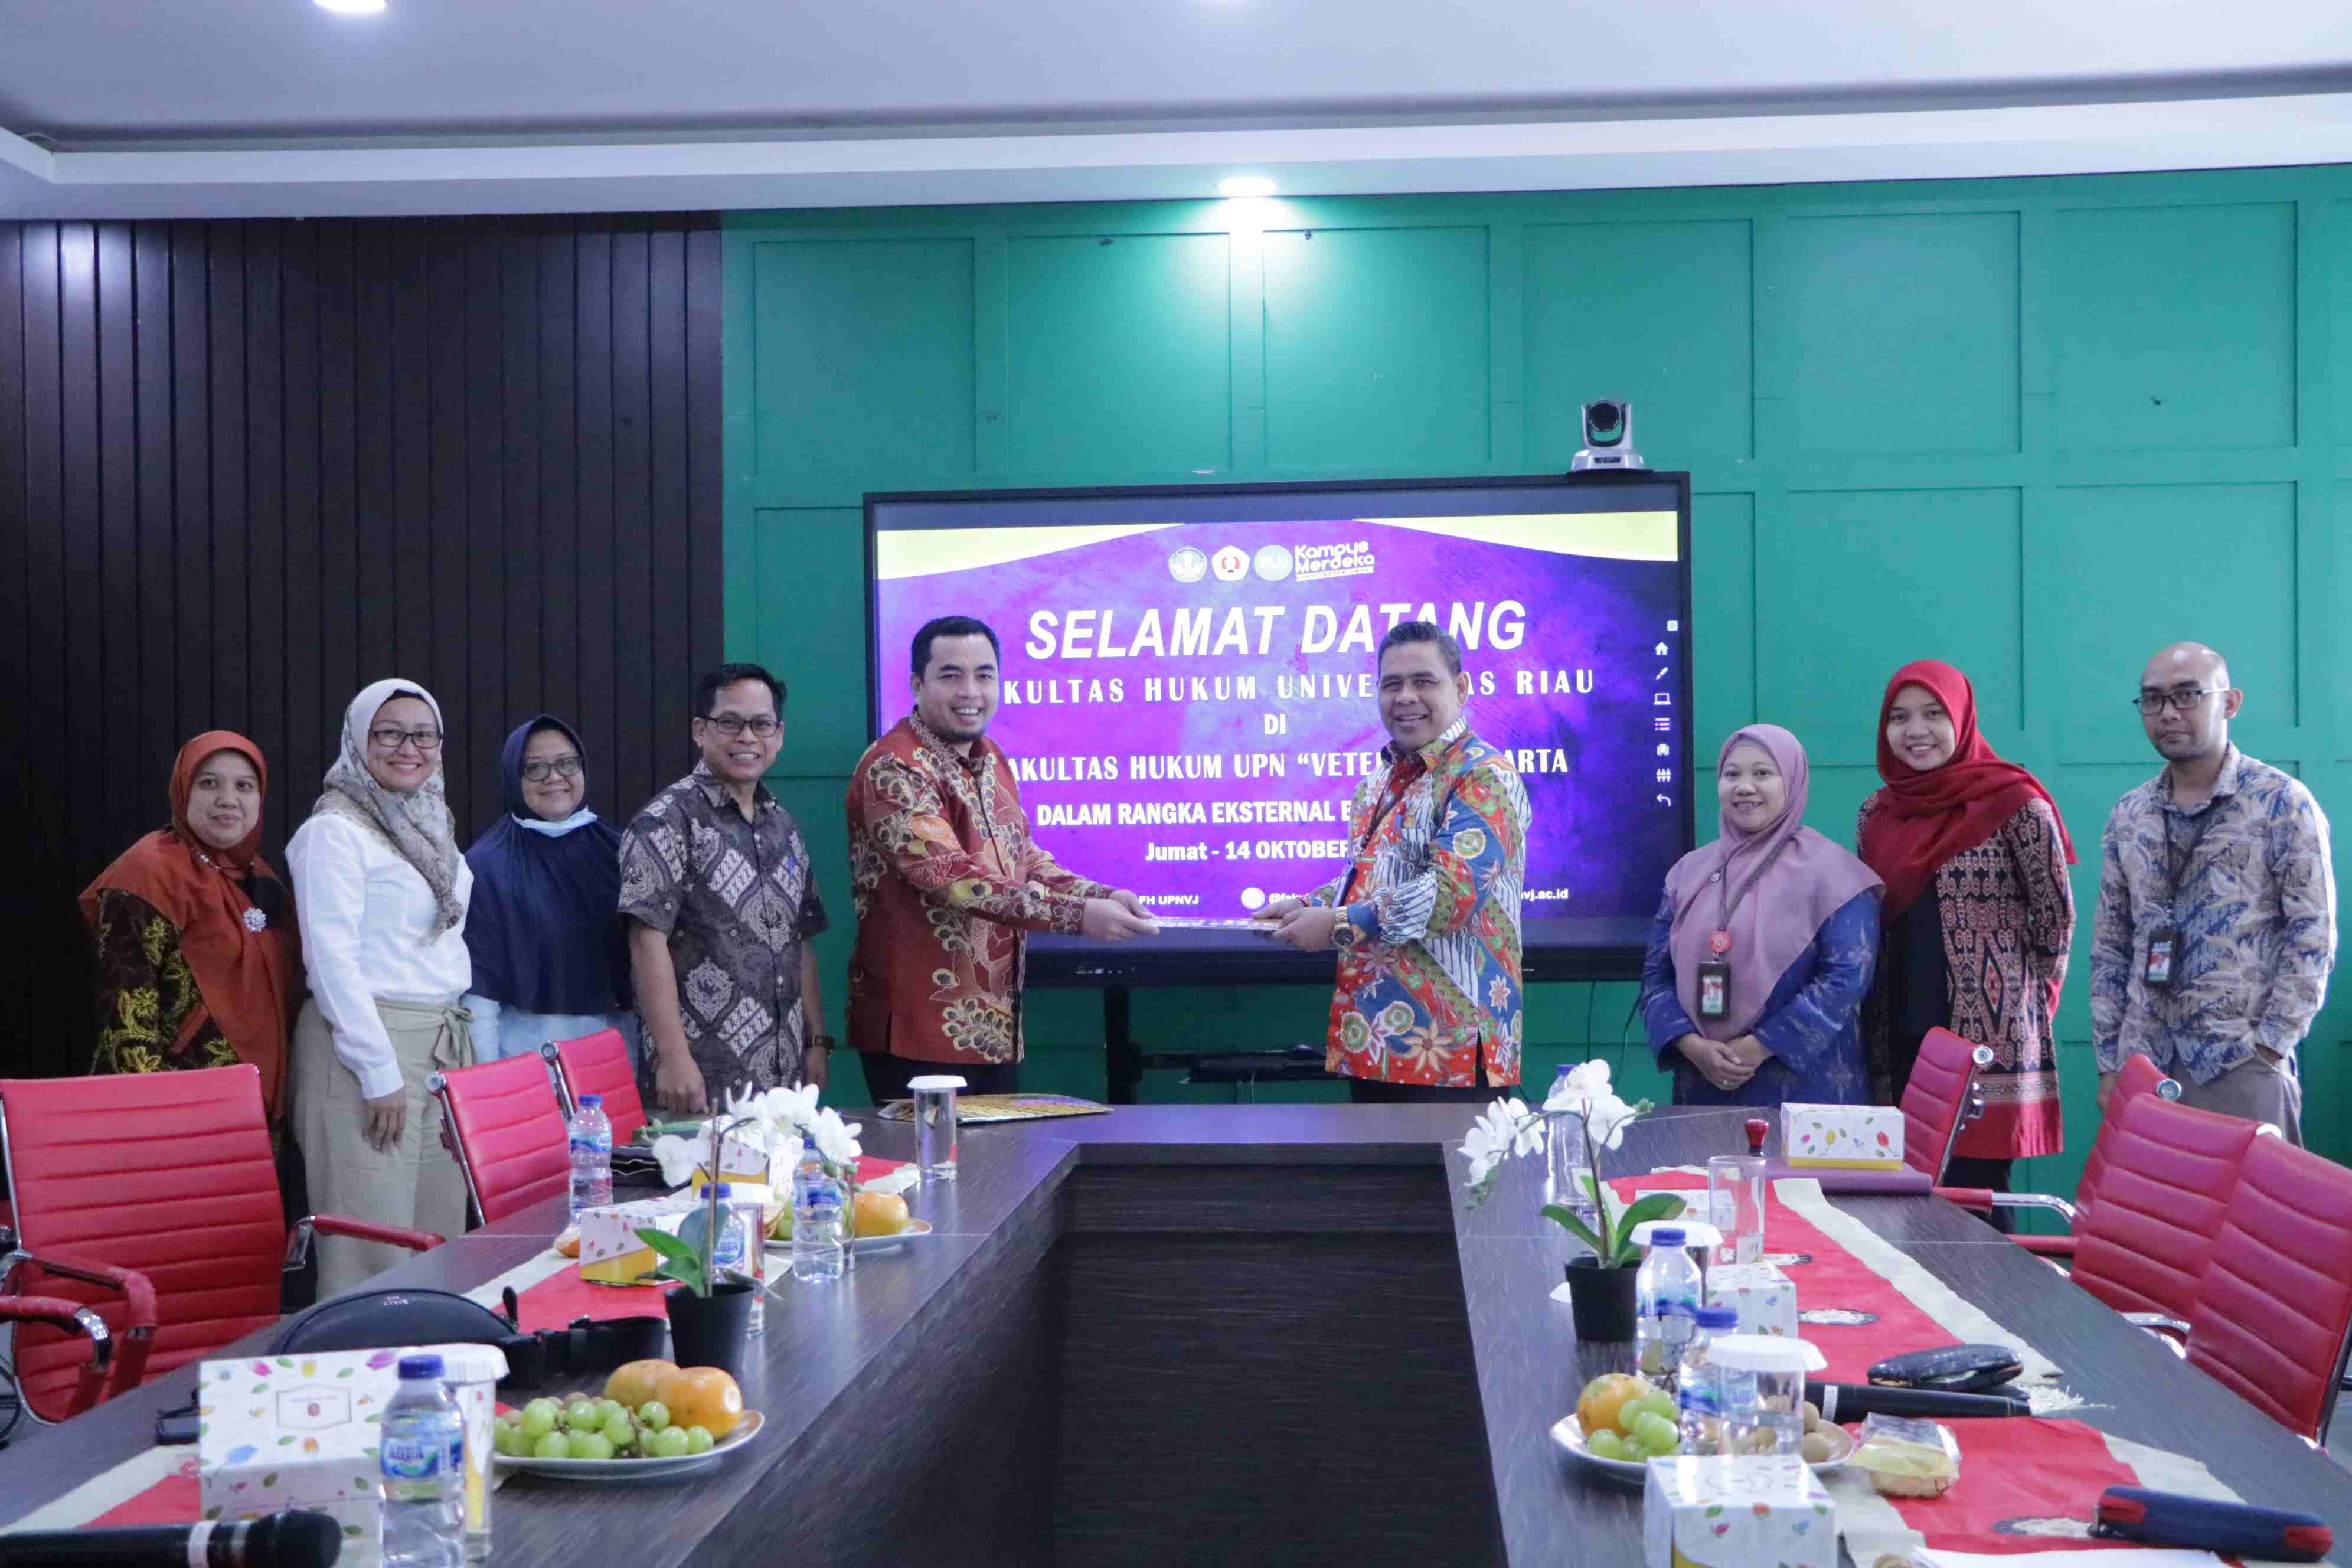 Dalam Rangka Eksternal Benchmarking Fakultas Hukum Universitas Riau (11)